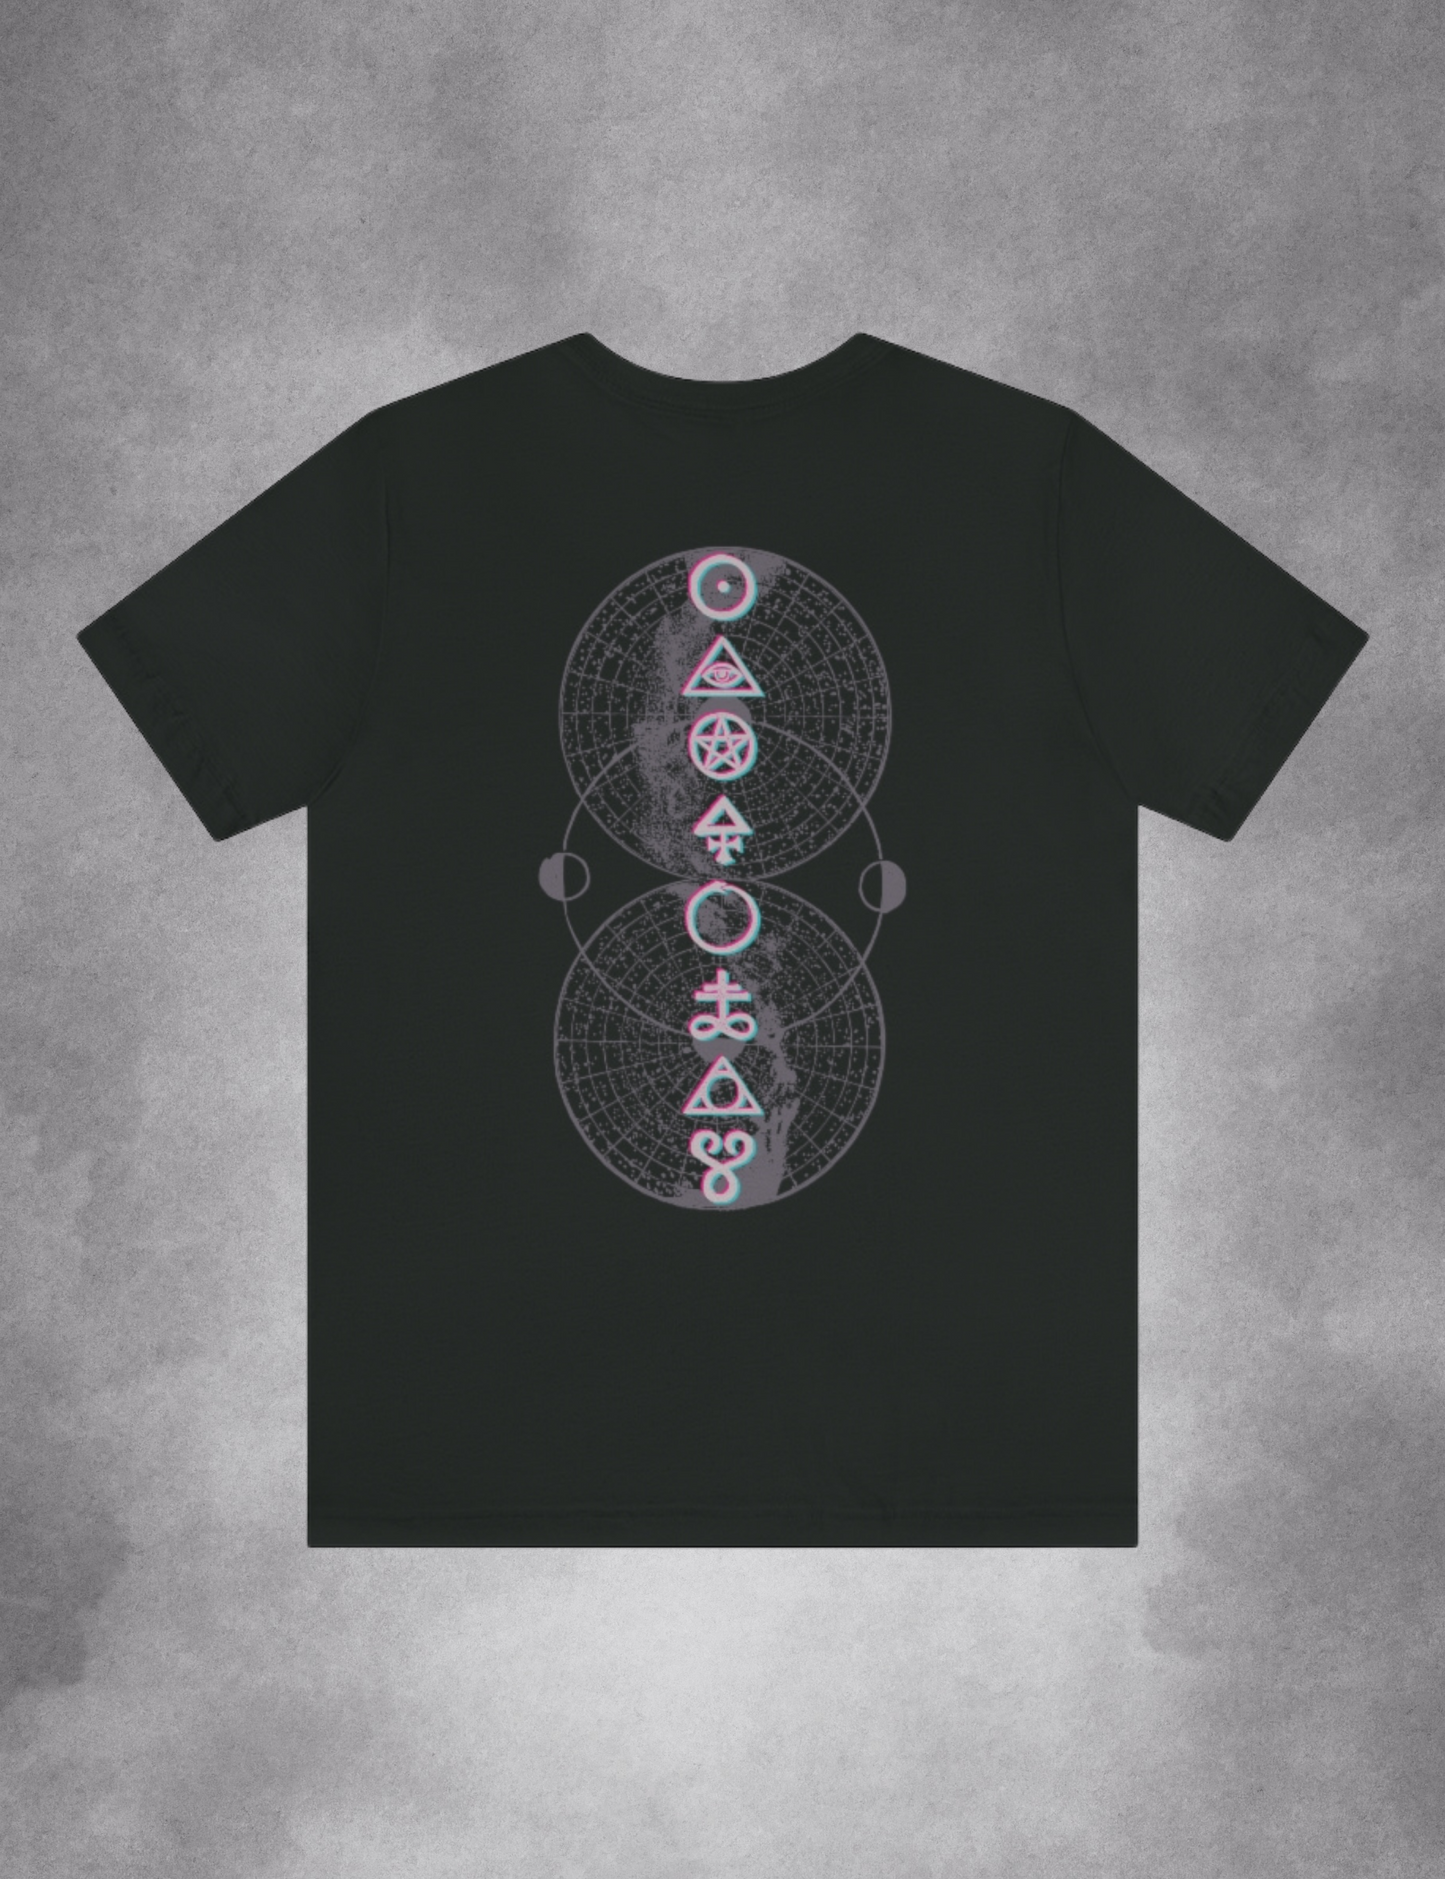 Glitch Occult Symbols Shirt